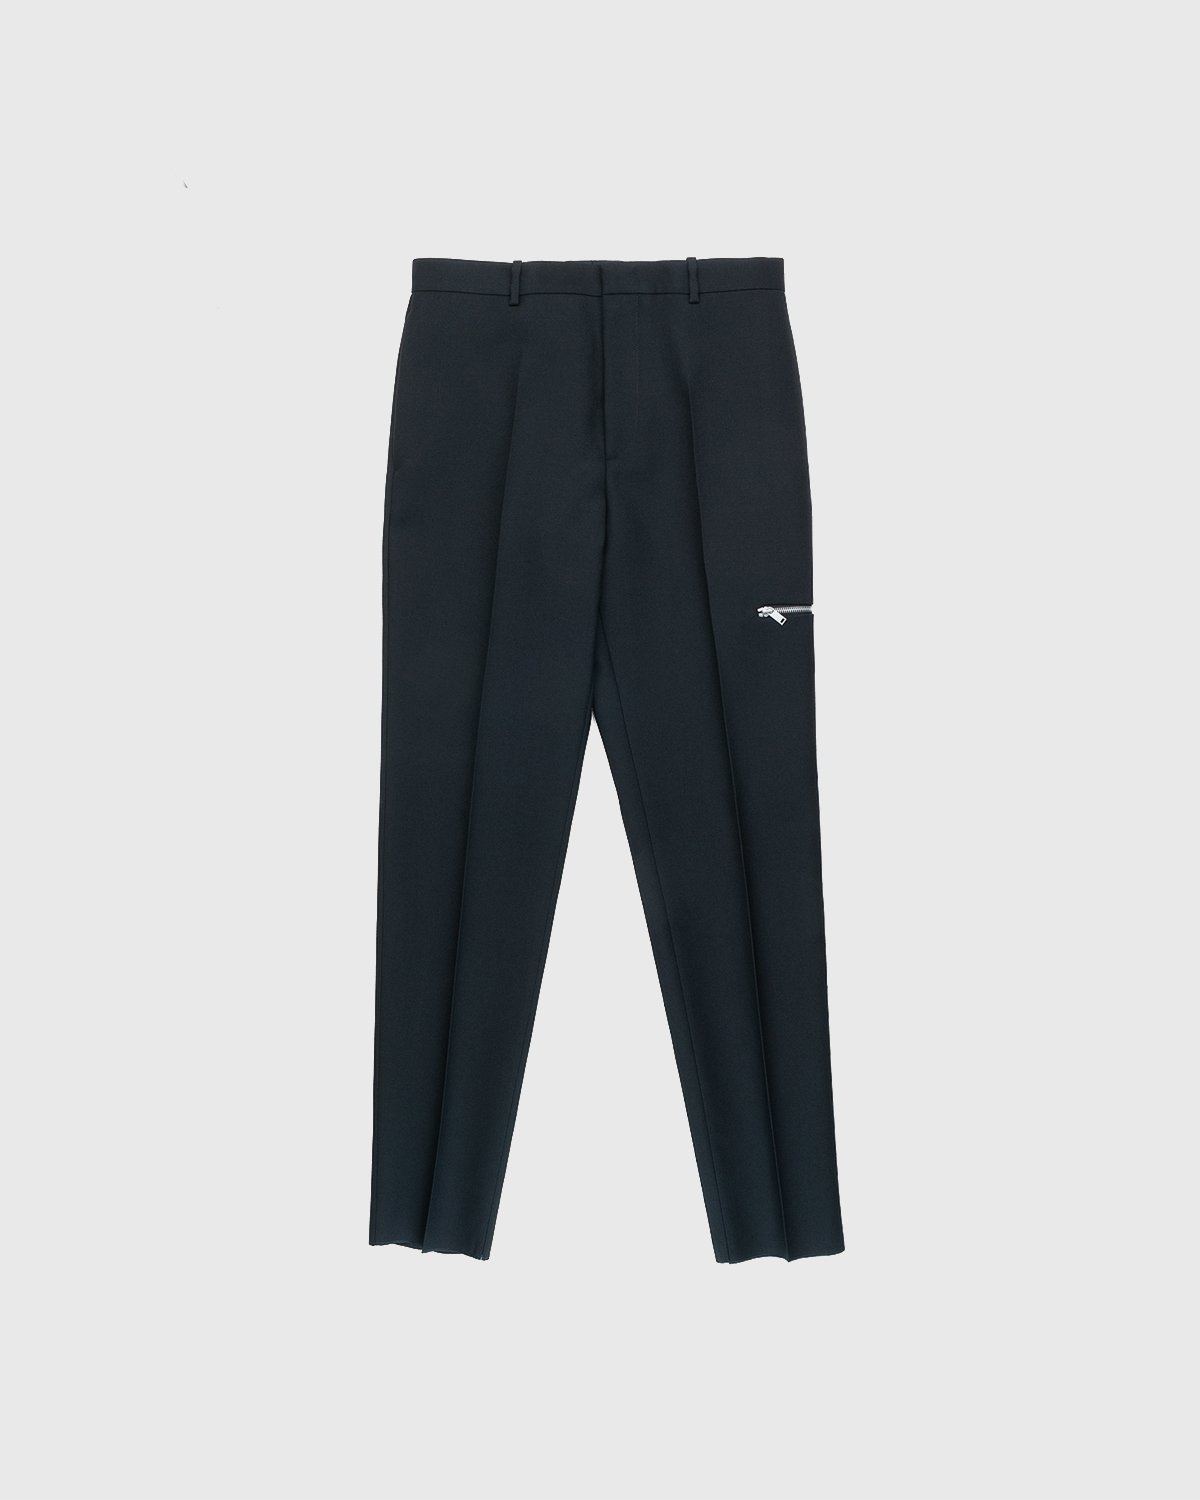 Jil Sander - Zip Pocket Trousers Black - Clothing - Black - Image 1